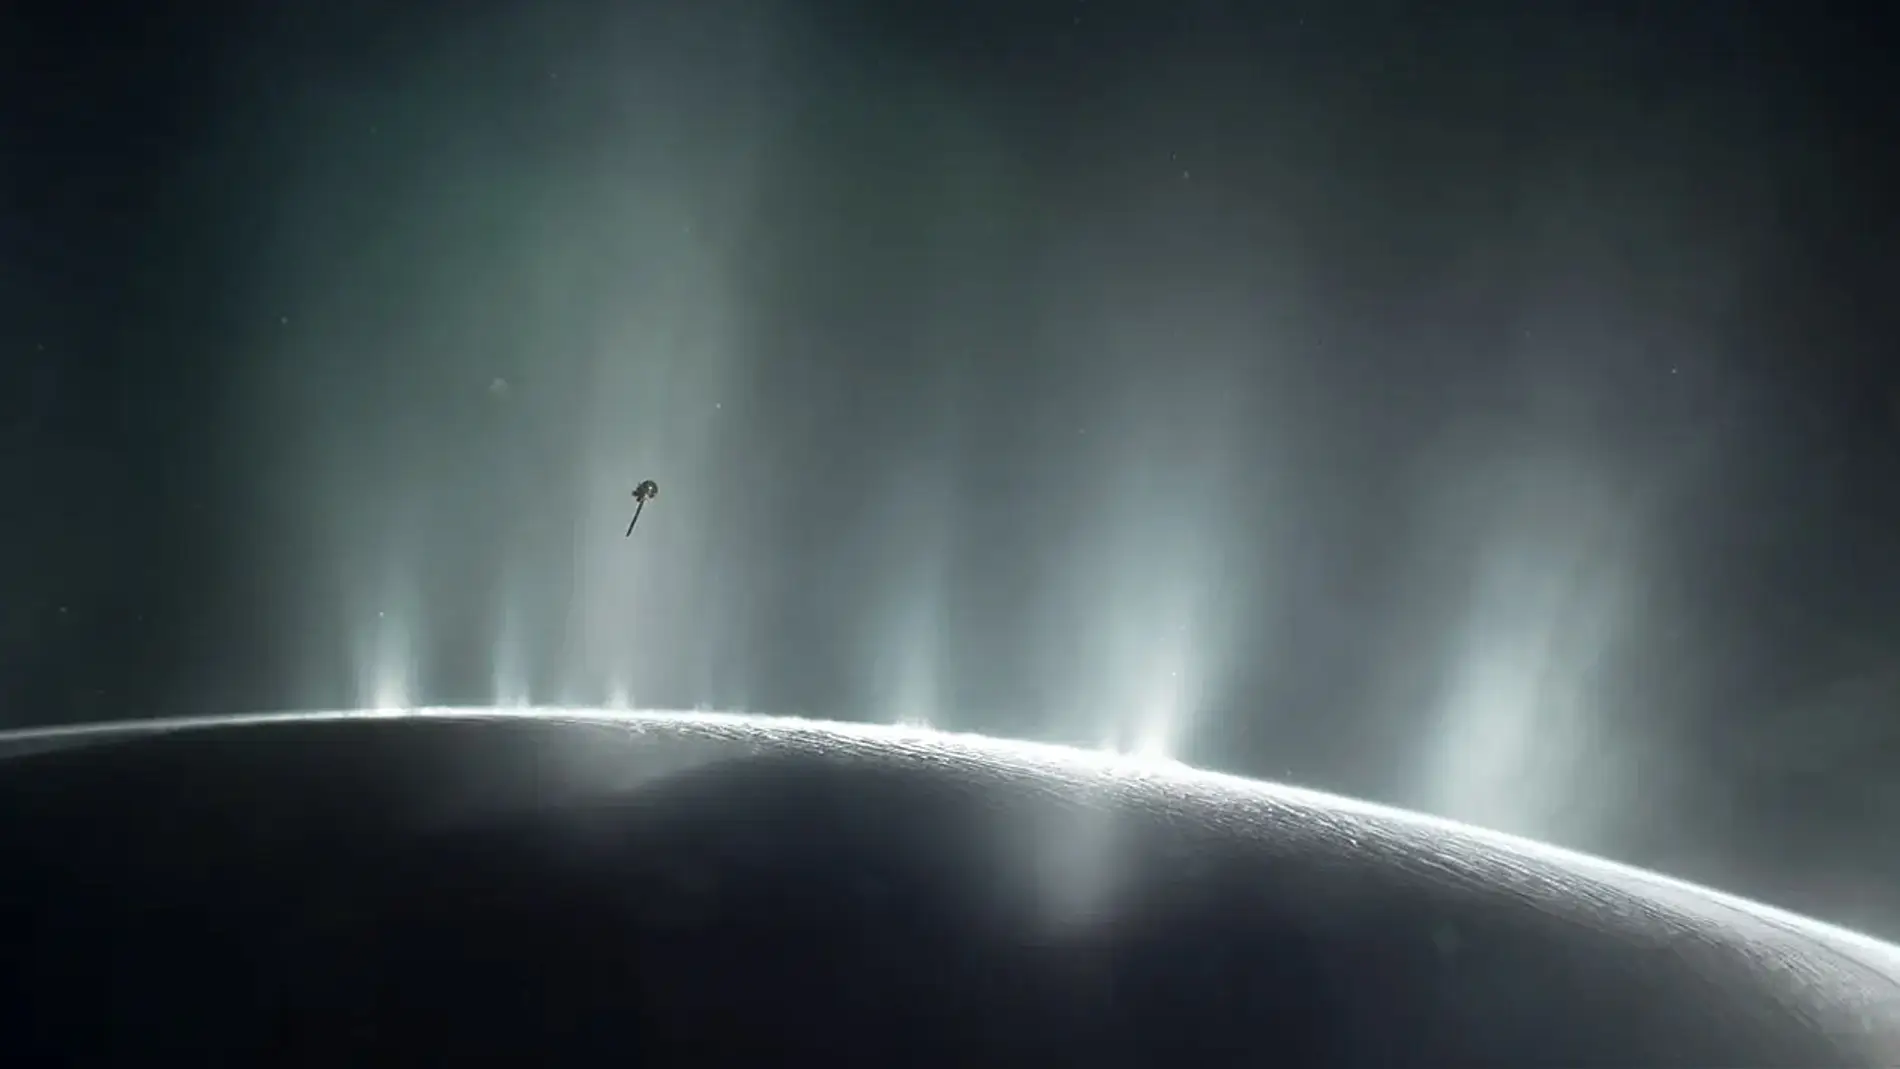 La sonda Cassini observó las plumas de agua helada y vapor en la luna Encelado